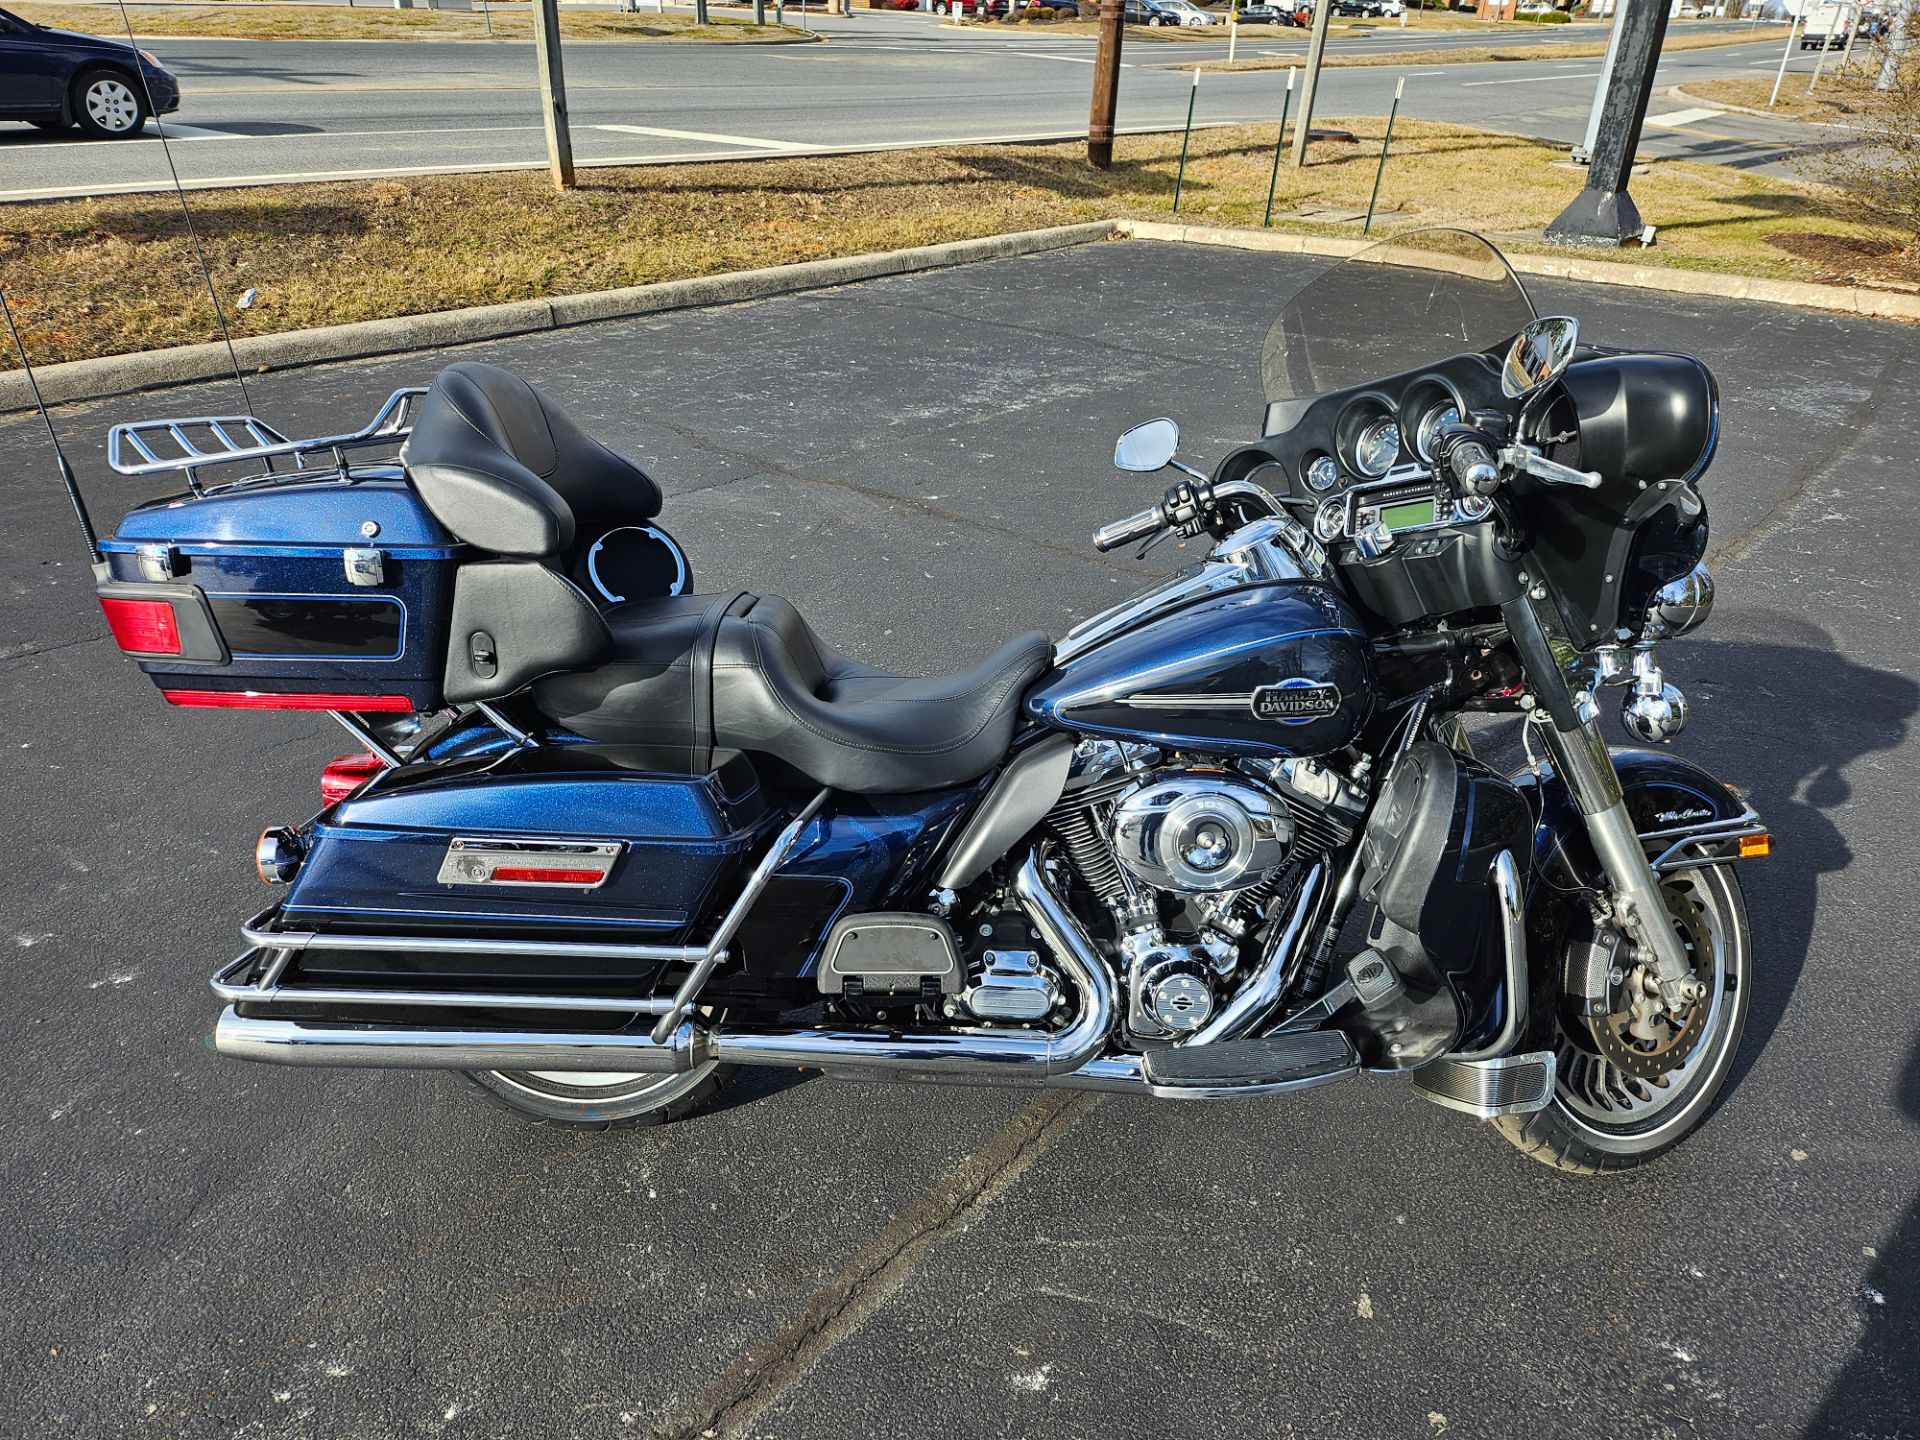 2012 Harley-Davidson Ultra Classic® Electra Glide® in Lynchburg, Virginia - Photo 8